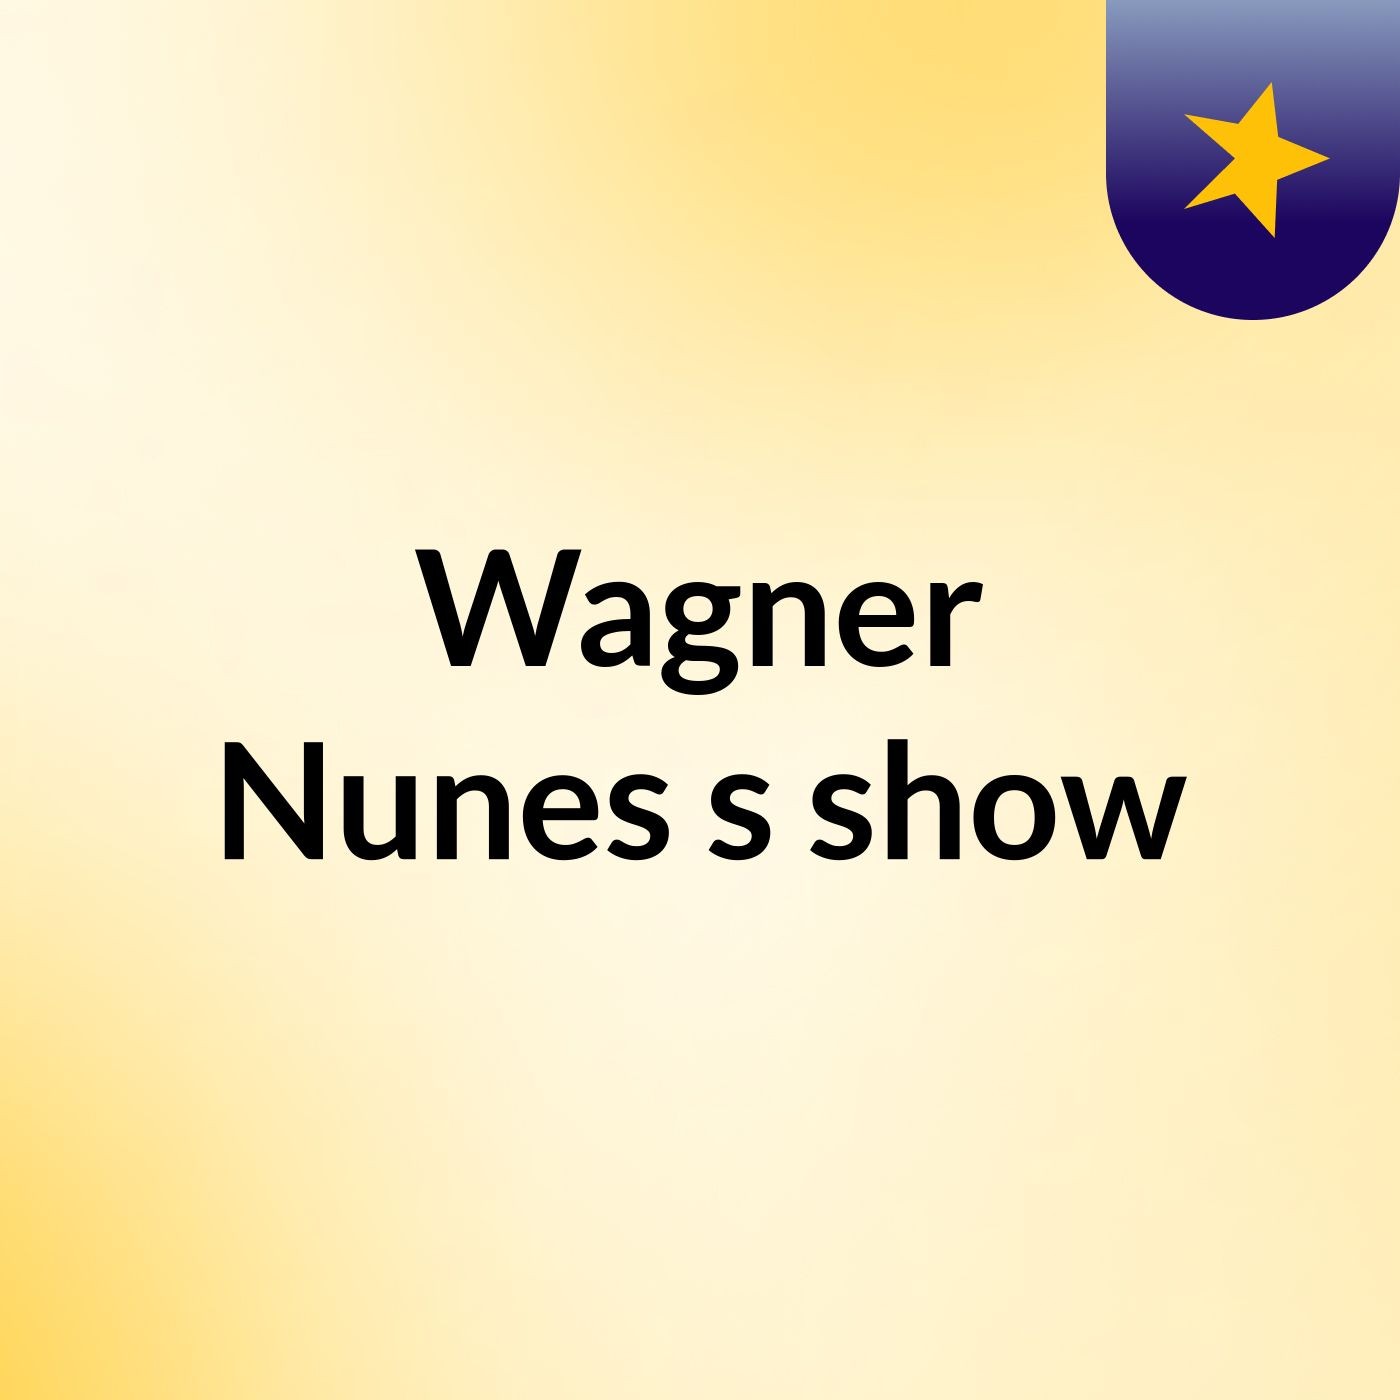 Wagner Nunes's show